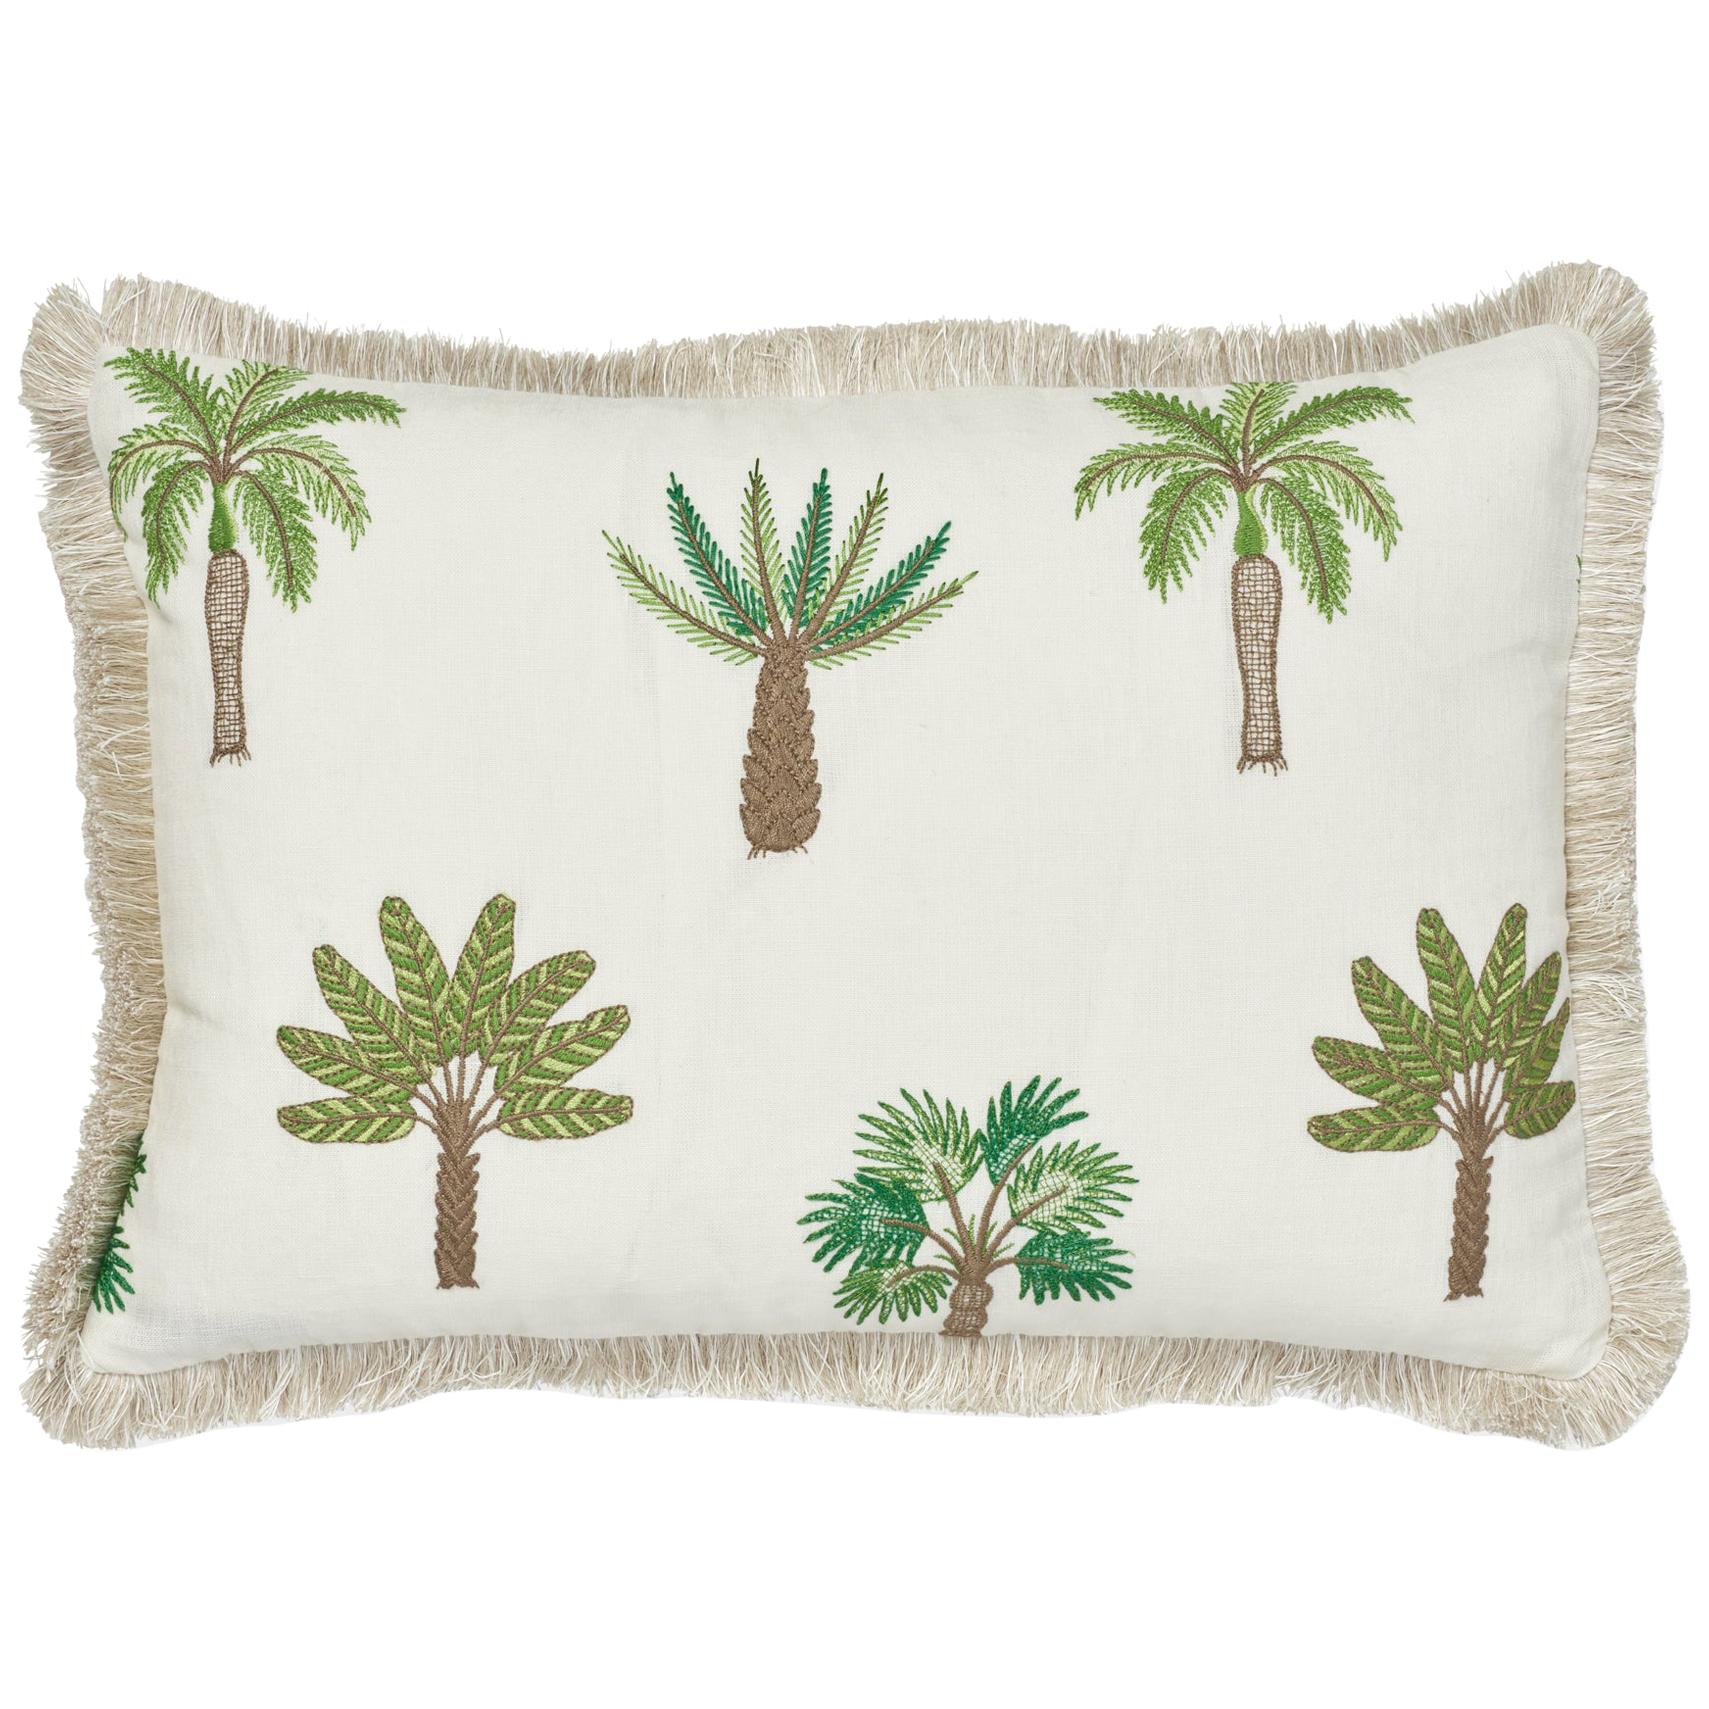 Schumacher Palmetto Beach Embroidery Green Two-Sided Linen Pillow